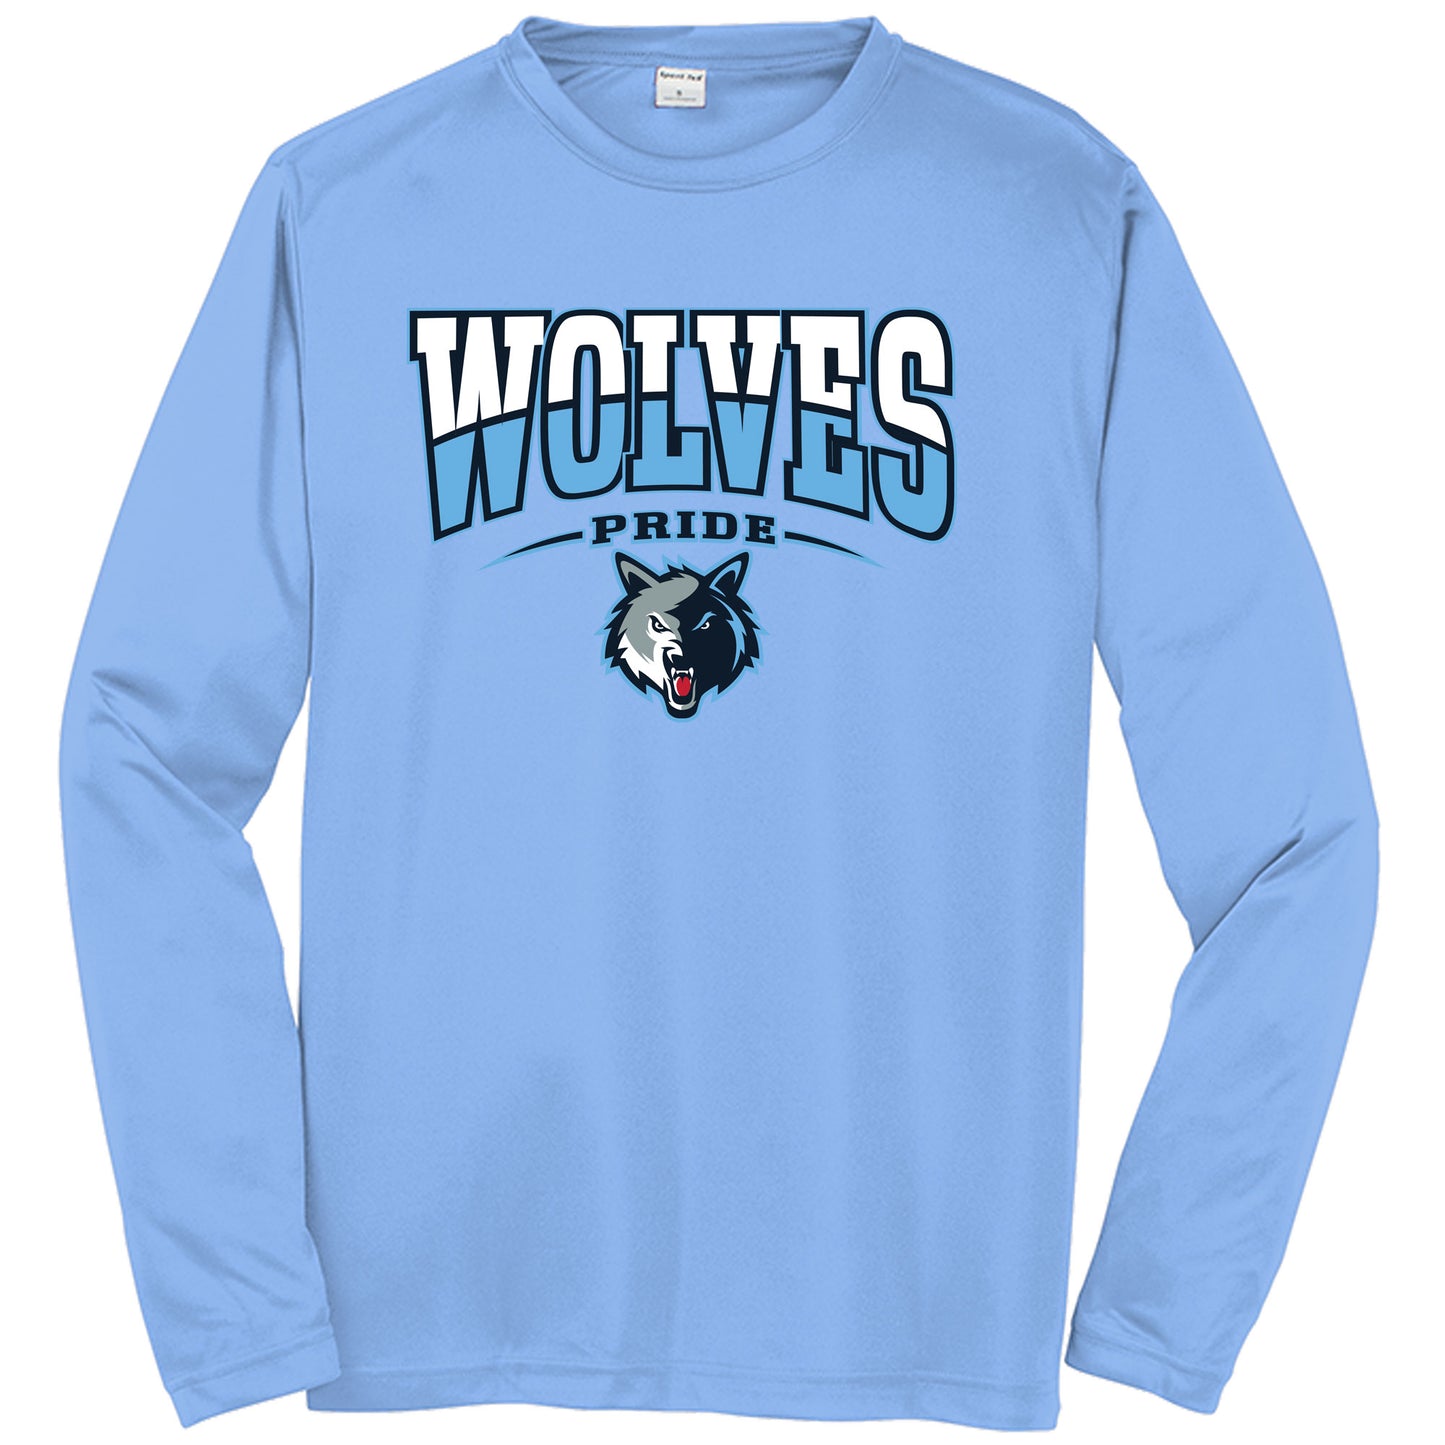 Newsome School Longsleeve Drifit Shirt "Wolves Pride"